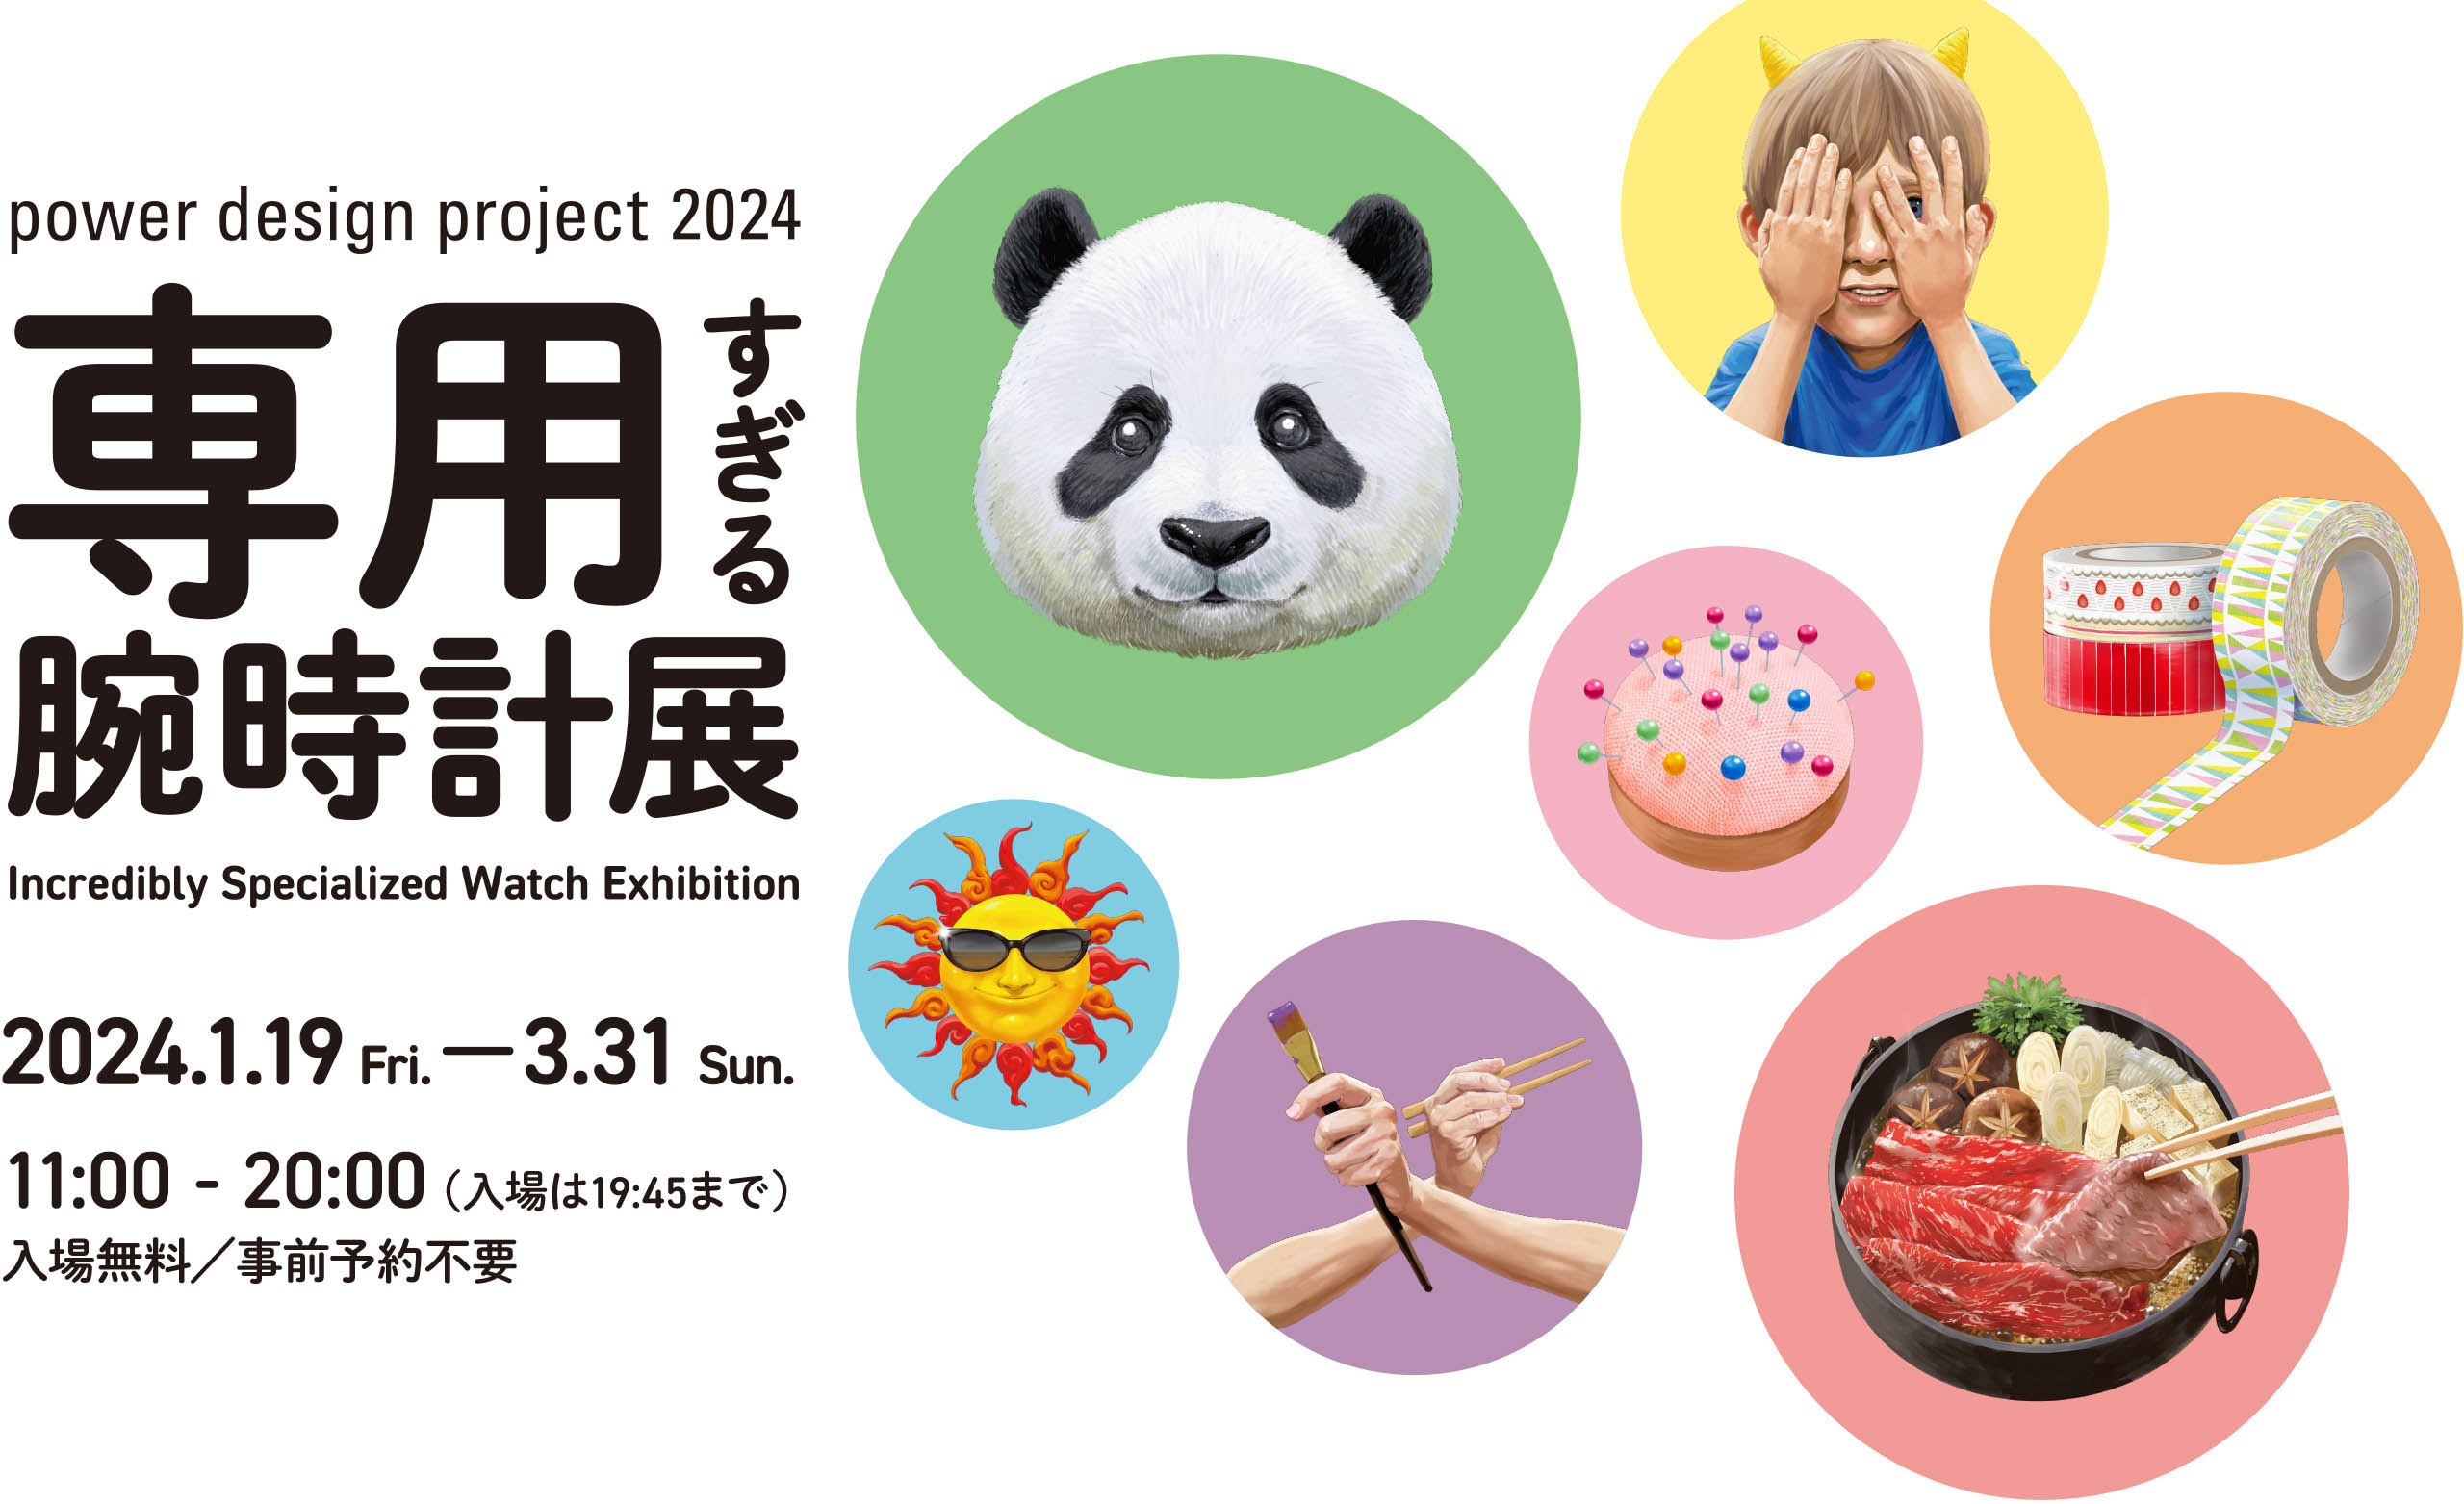 power design project 2024「専用すぎる腕時計展」｜2024.1/19 fri.〜3/31 sun.｜Seiko Seed